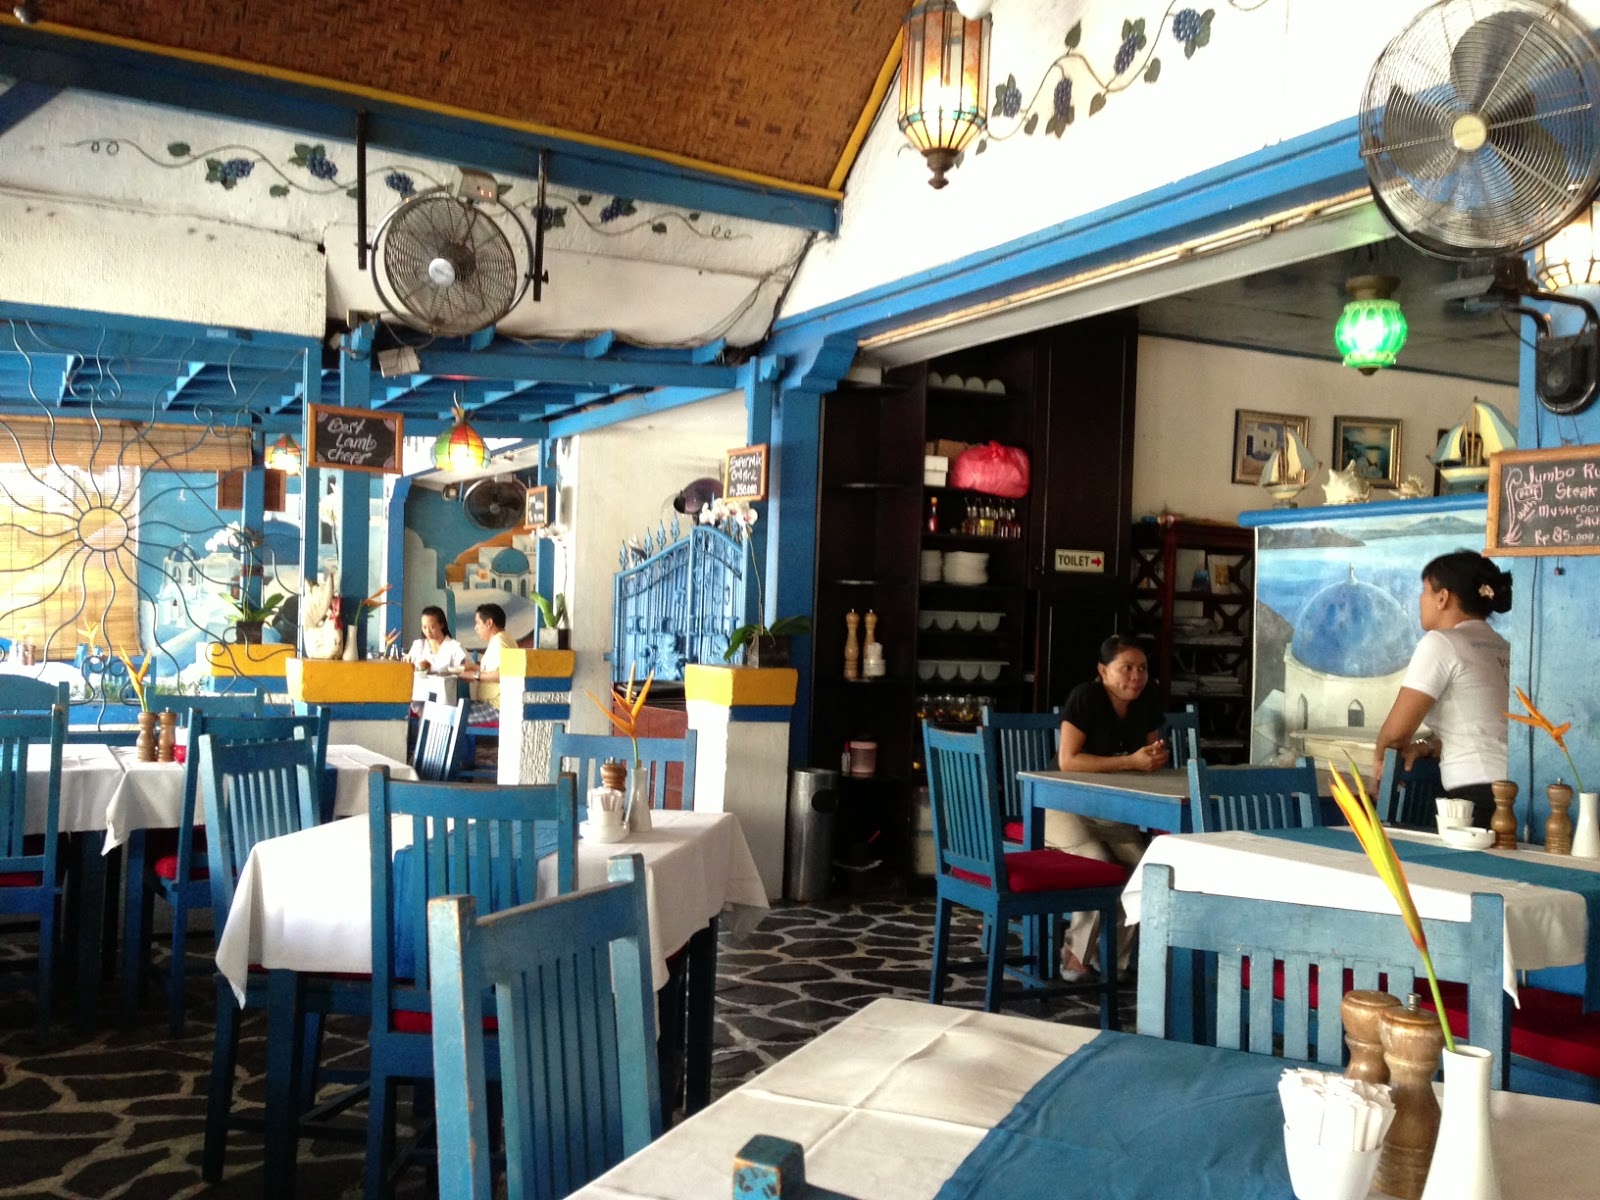 Try This Menu !!!: Mykonos Greek Restaurant - Bali